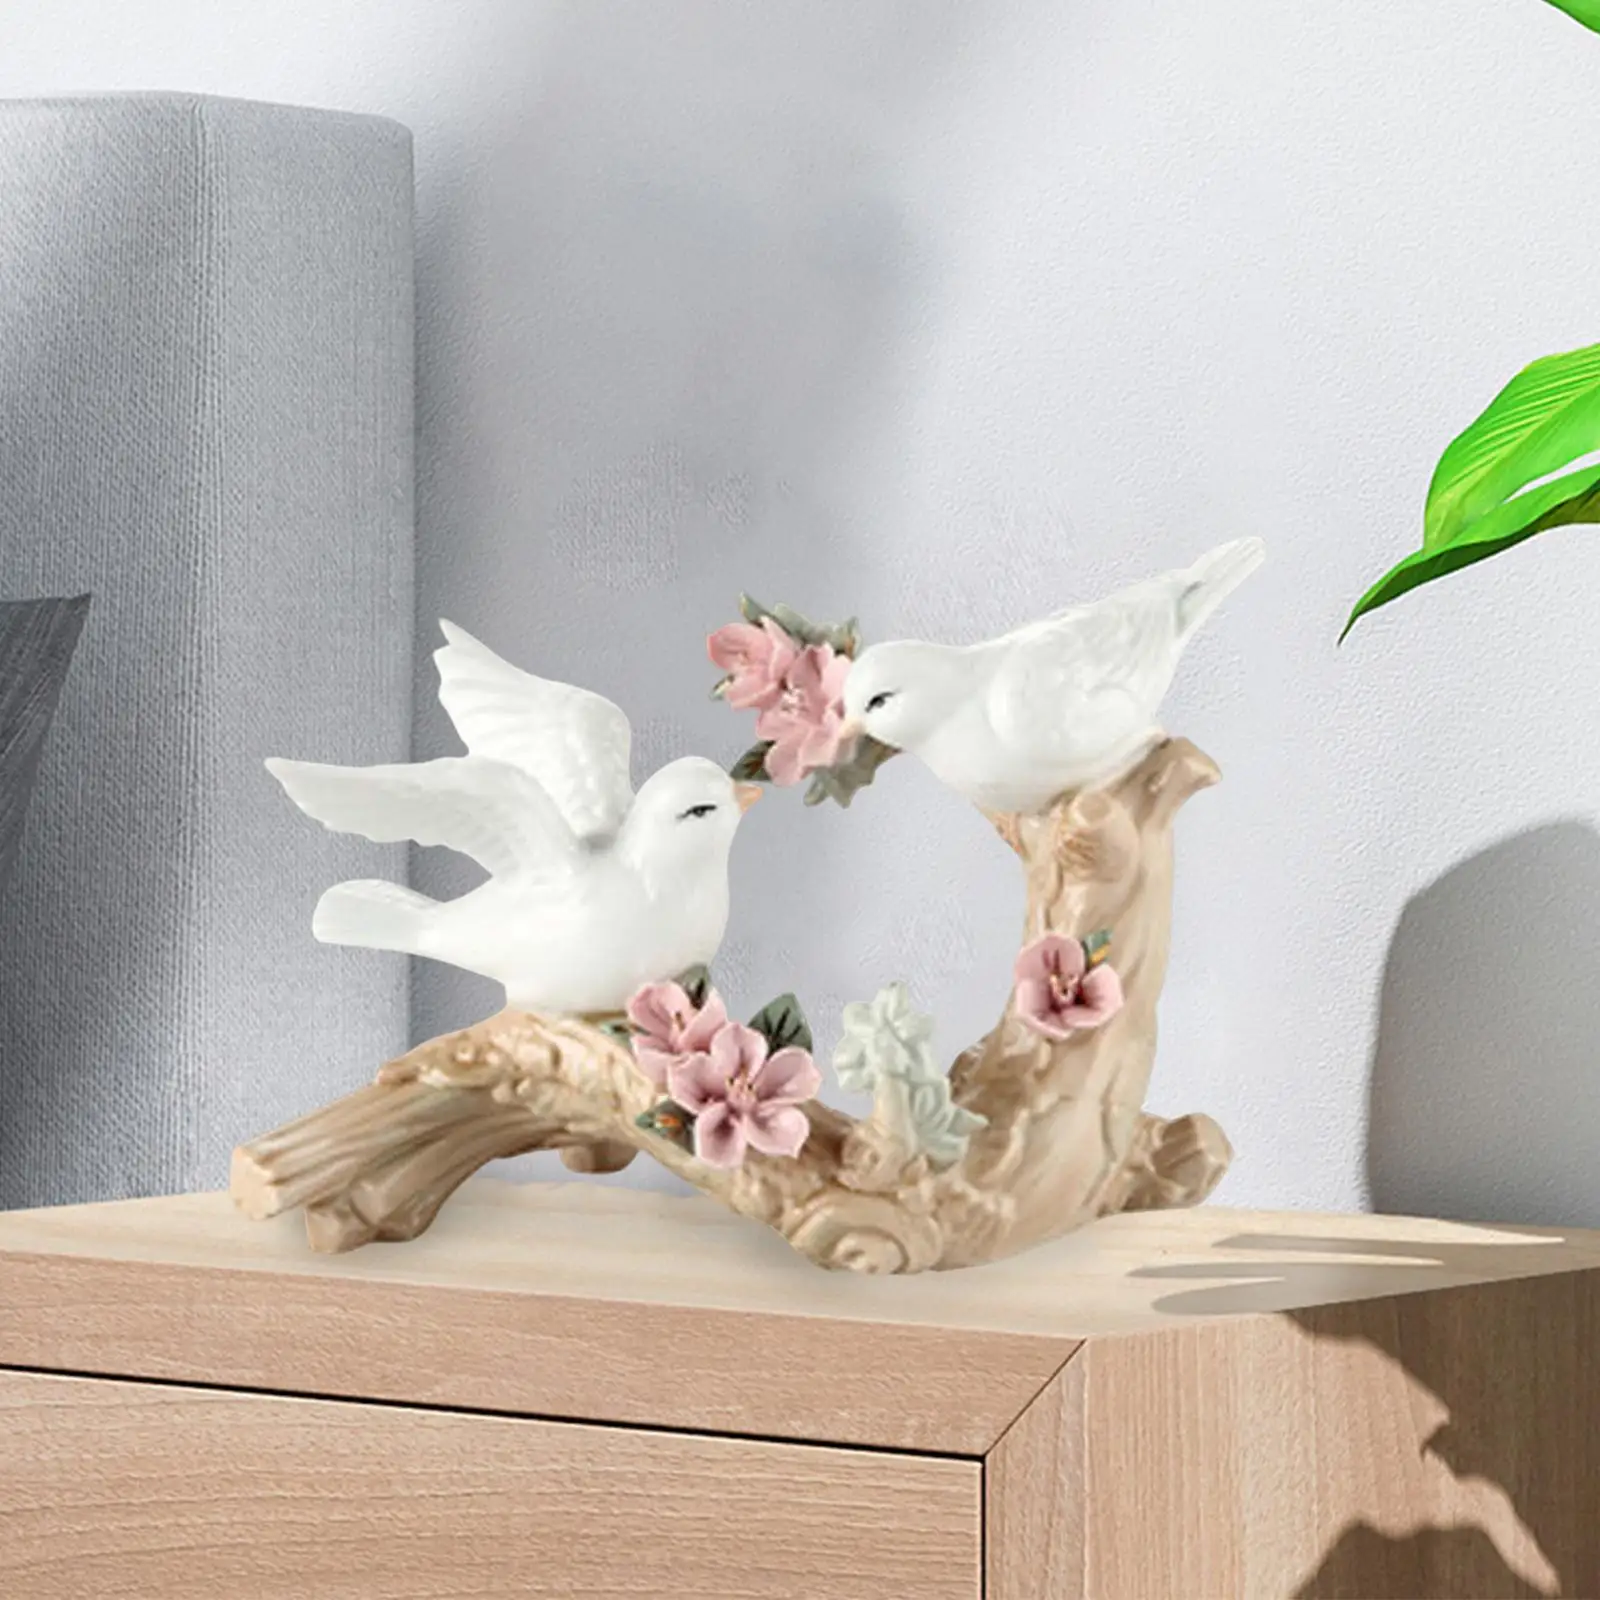 Lifelike Bird Sculpture Centerpiece Art Collection Ceramic Display Modern Ornaments for Bedroom Festival Home Desktop Easter